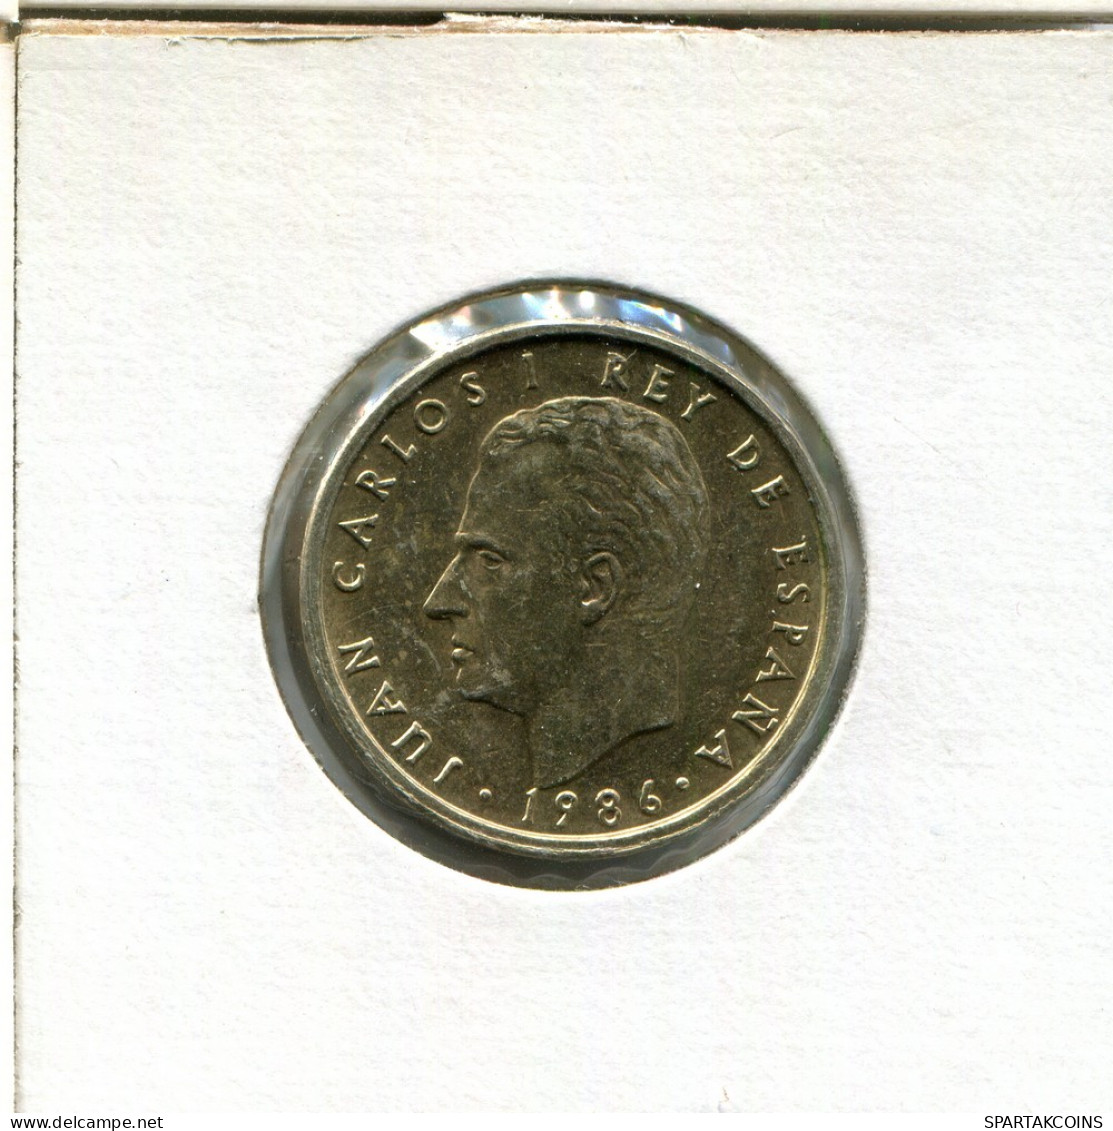 100 PESETAS 1986 ESPAÑA Moneda SPAIN #AT933.E - 100 Peseta